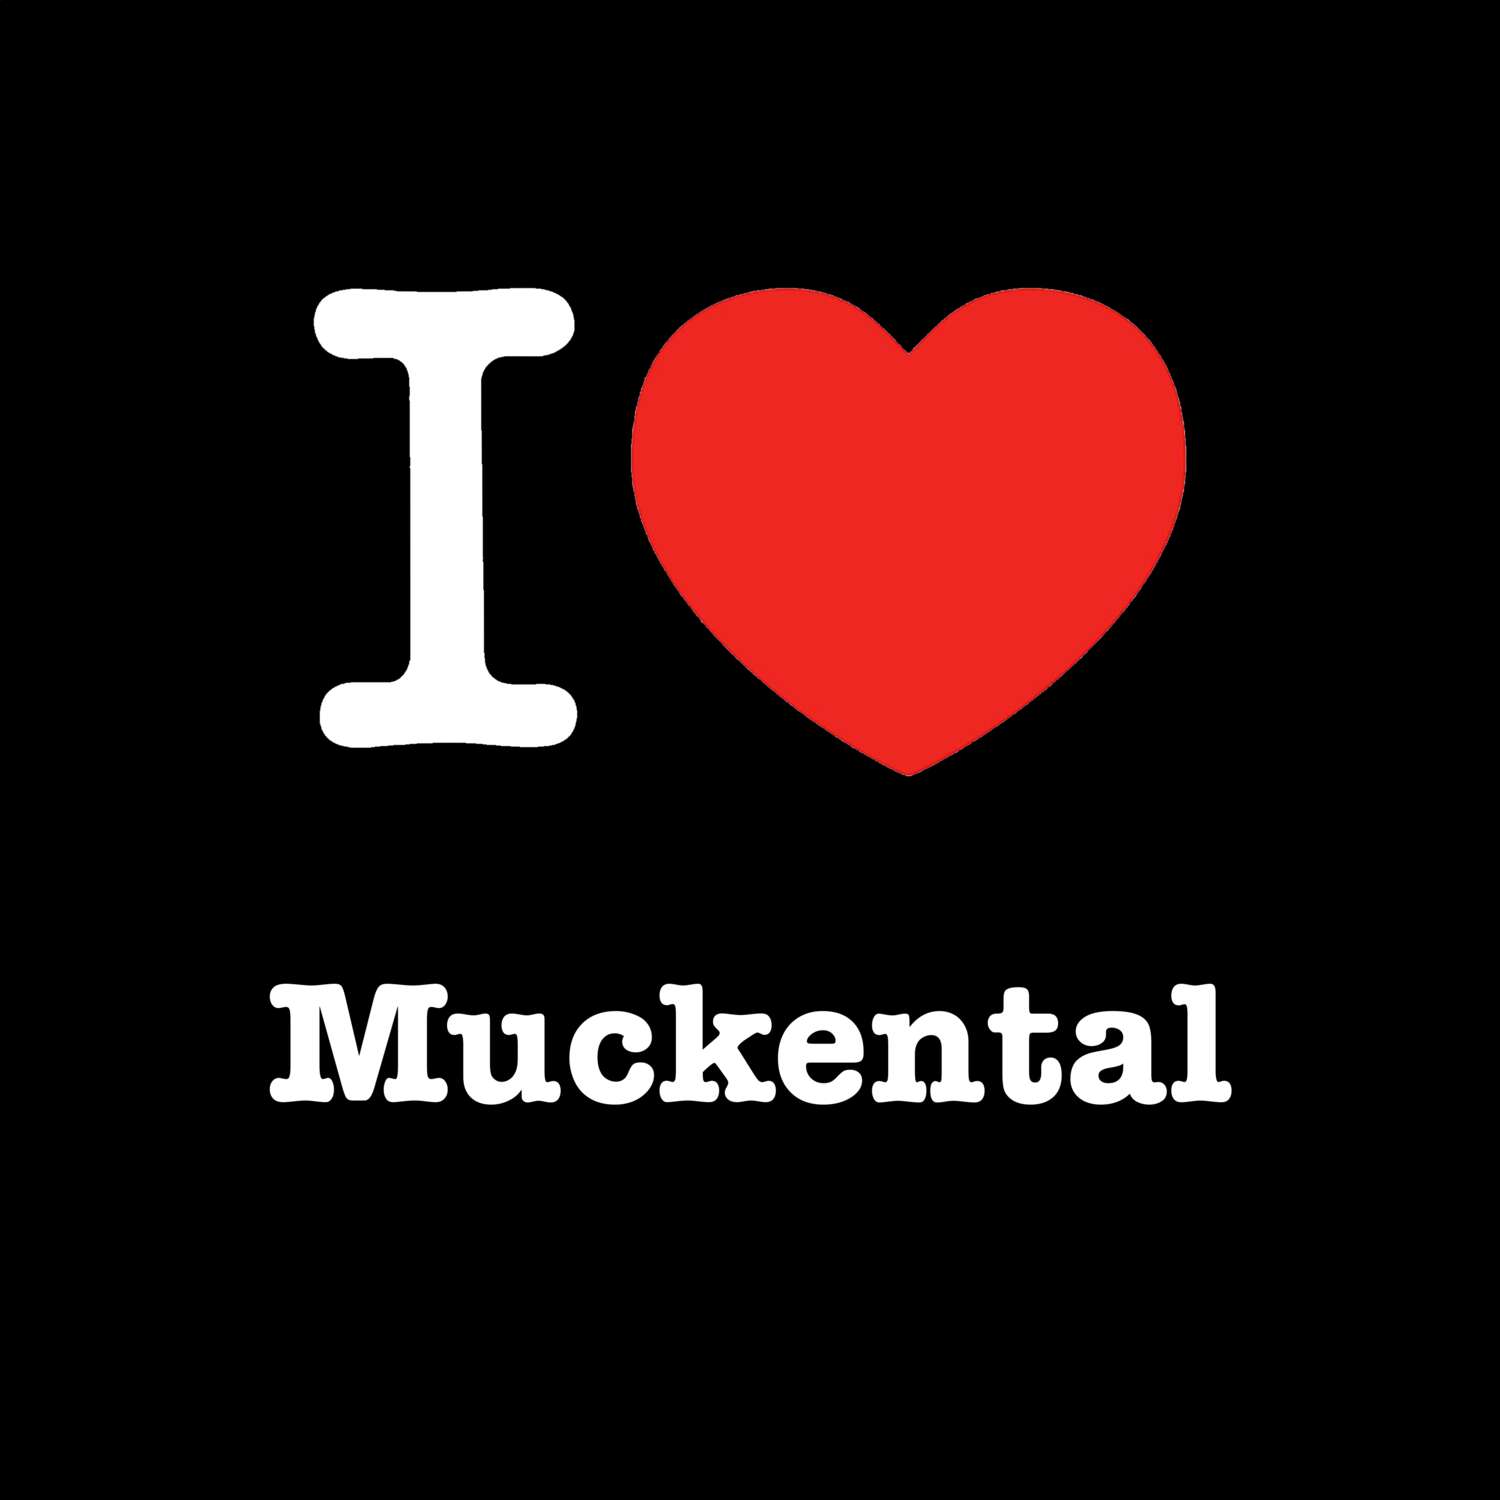 Muckental T-Shirt »I love«